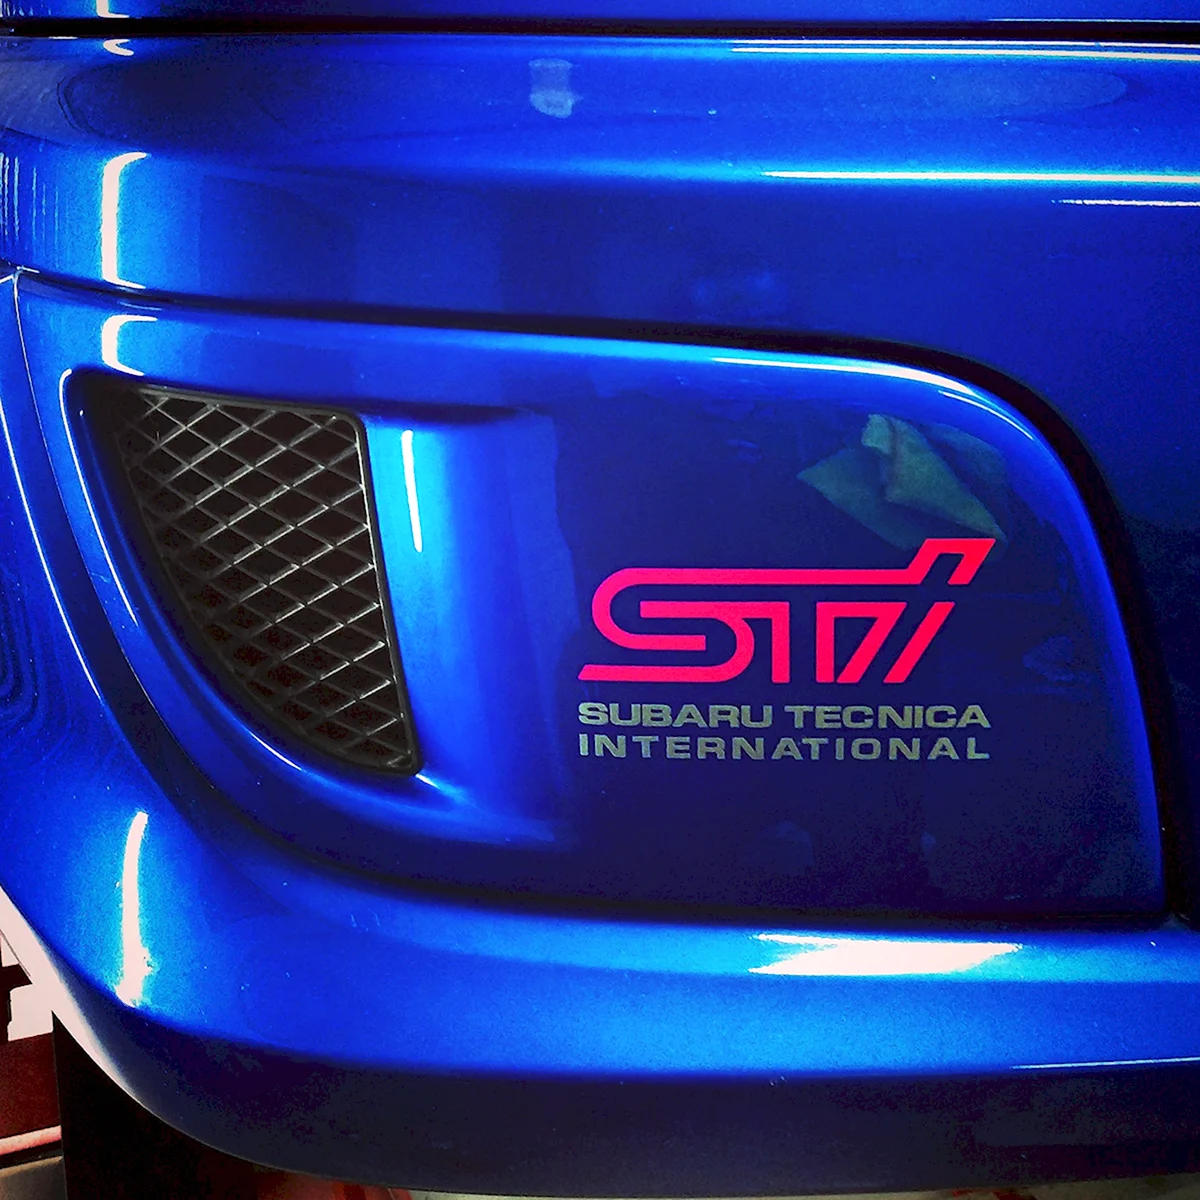 Subaru tecnica International